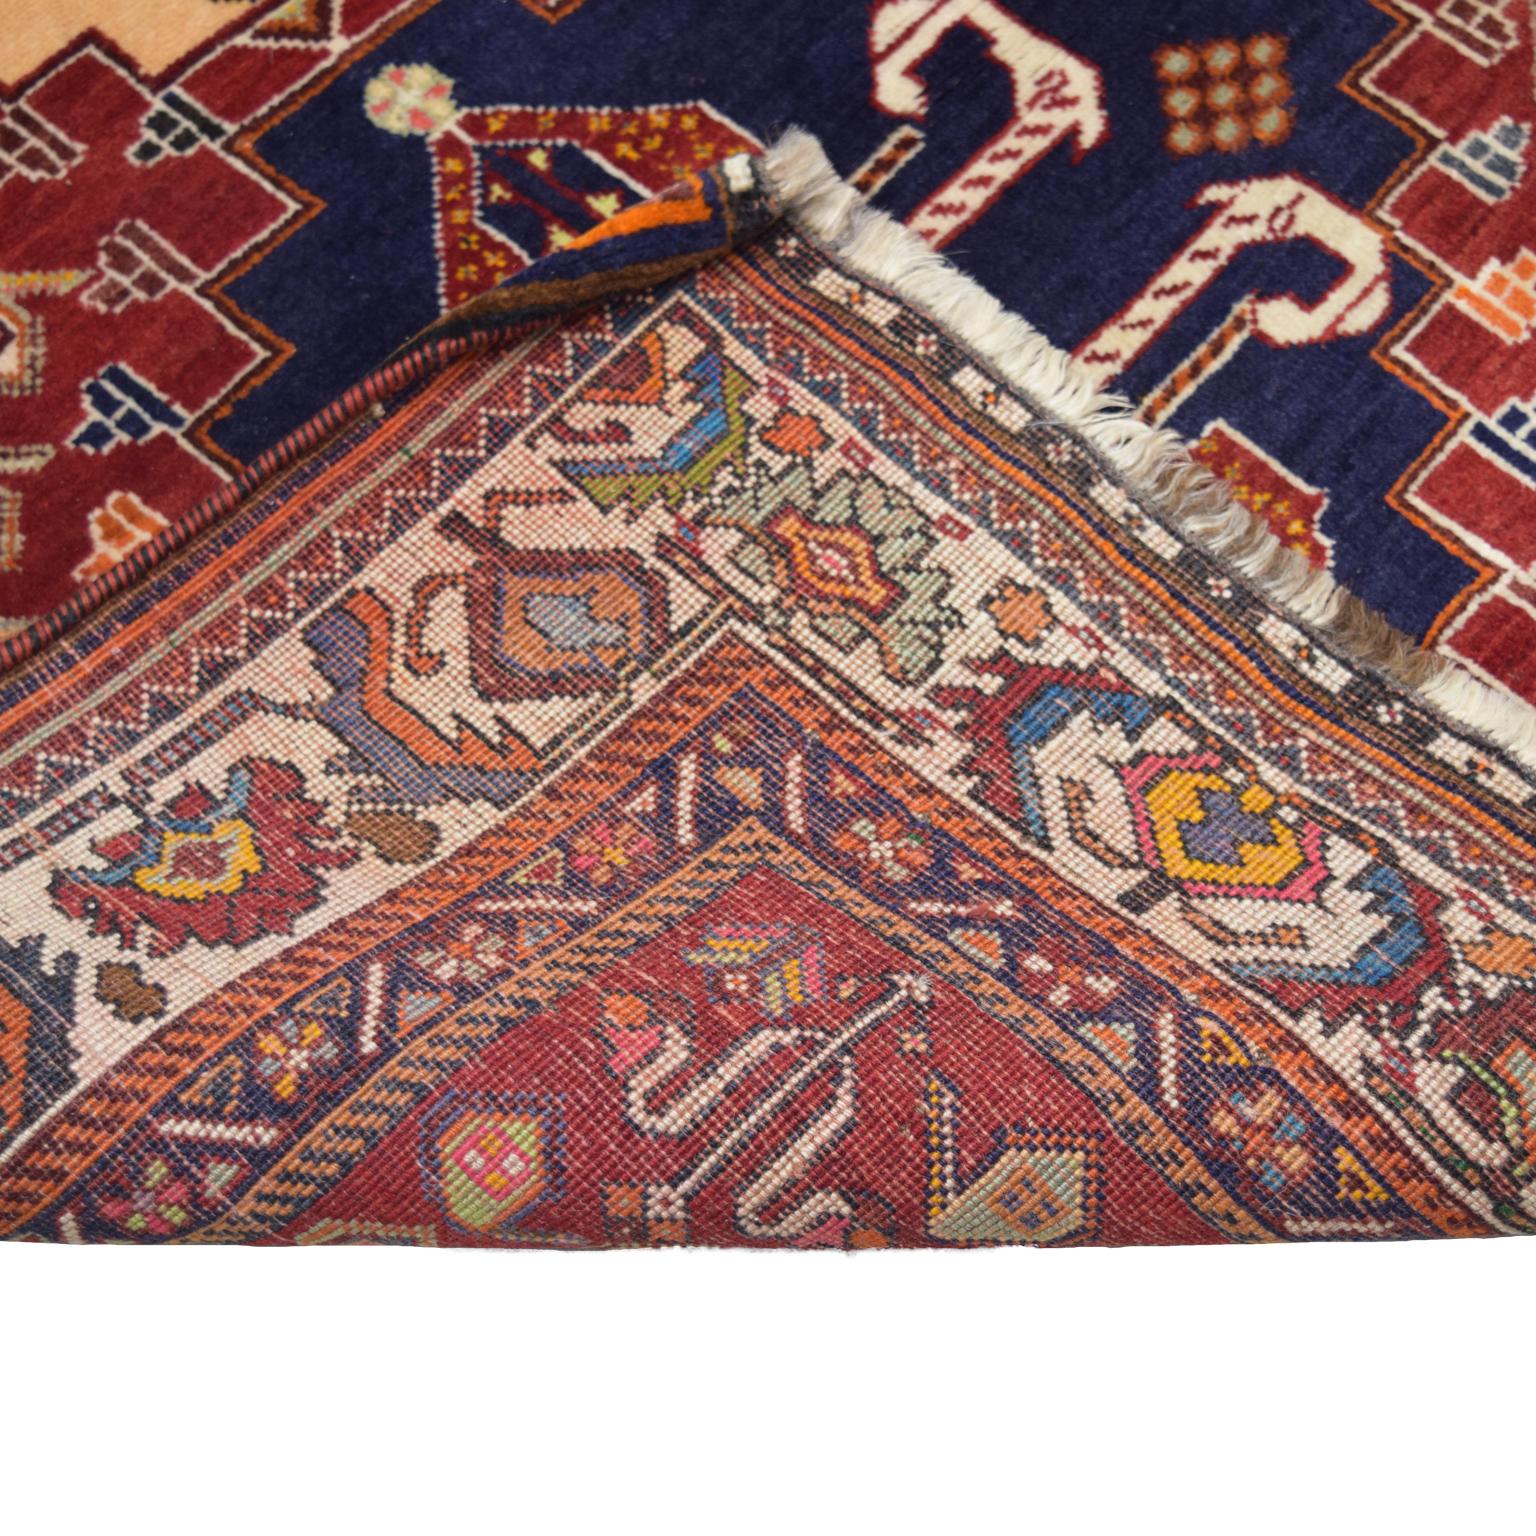 Vintage 1930s Wool Persian Kashkouli Tribal Rug, 4' x 6' For Sale 2